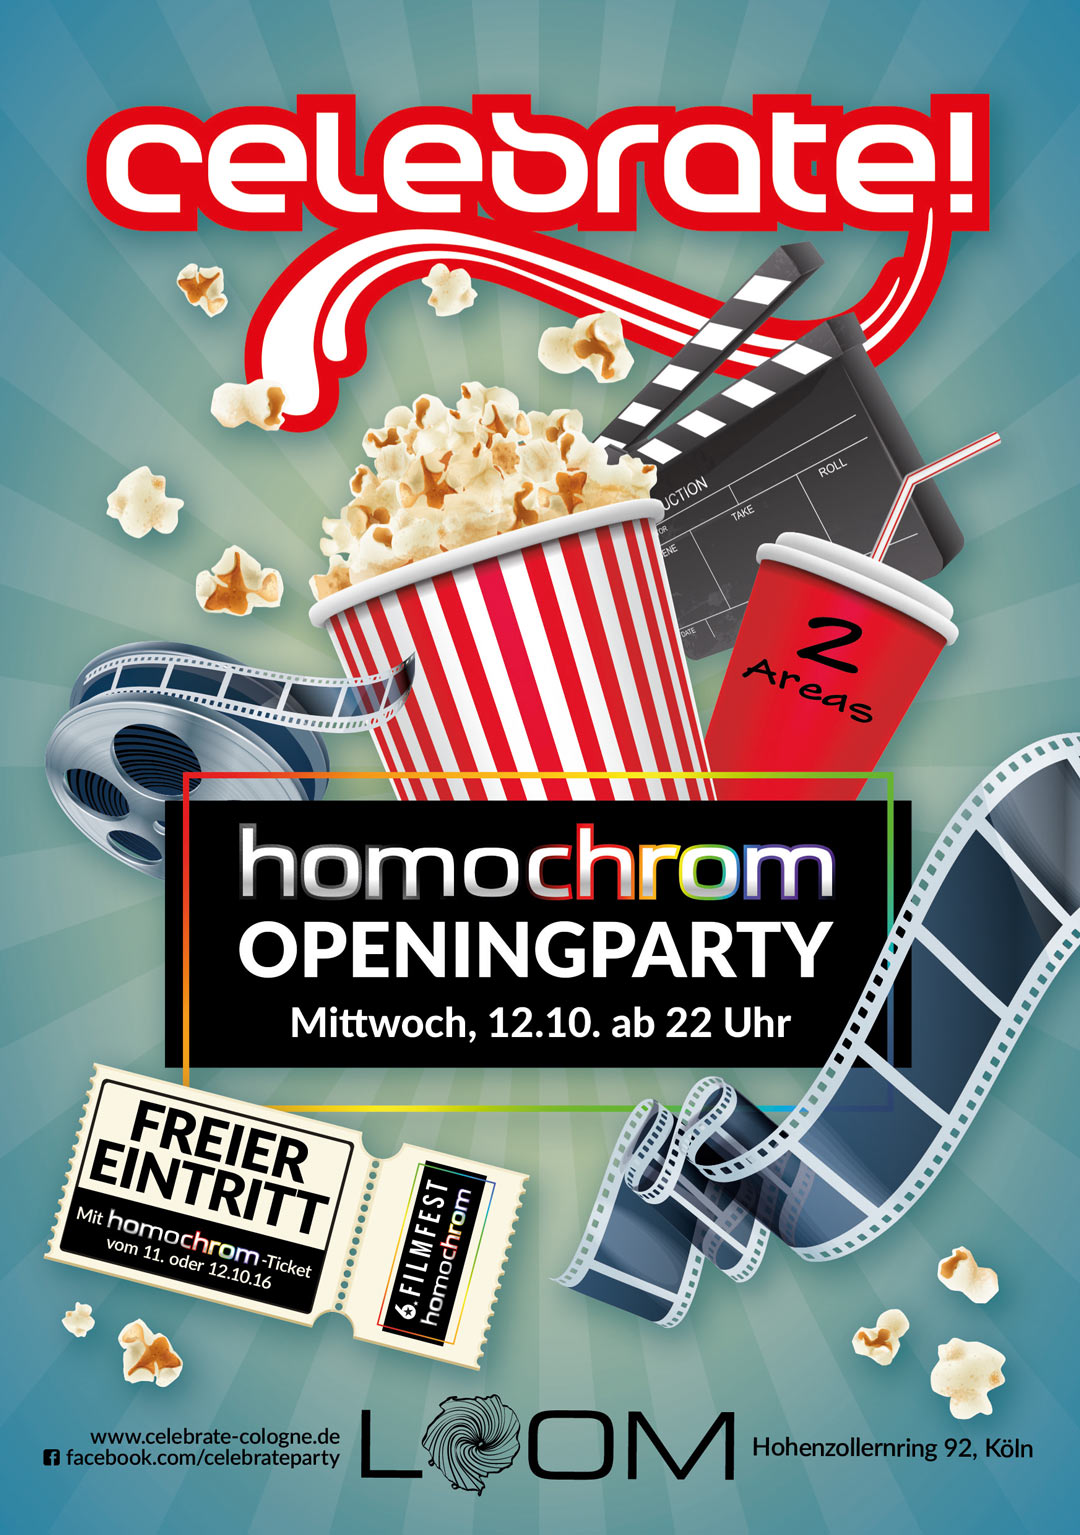 celebrate! die Openingparty des 6. Filmfests homochrom am Mittwoch 12.10. ab 22 Uhr im Loom Club, Köln; freier Eintritt mit Eintrittskarten des Filmfests vom 11. und 12.10.2016